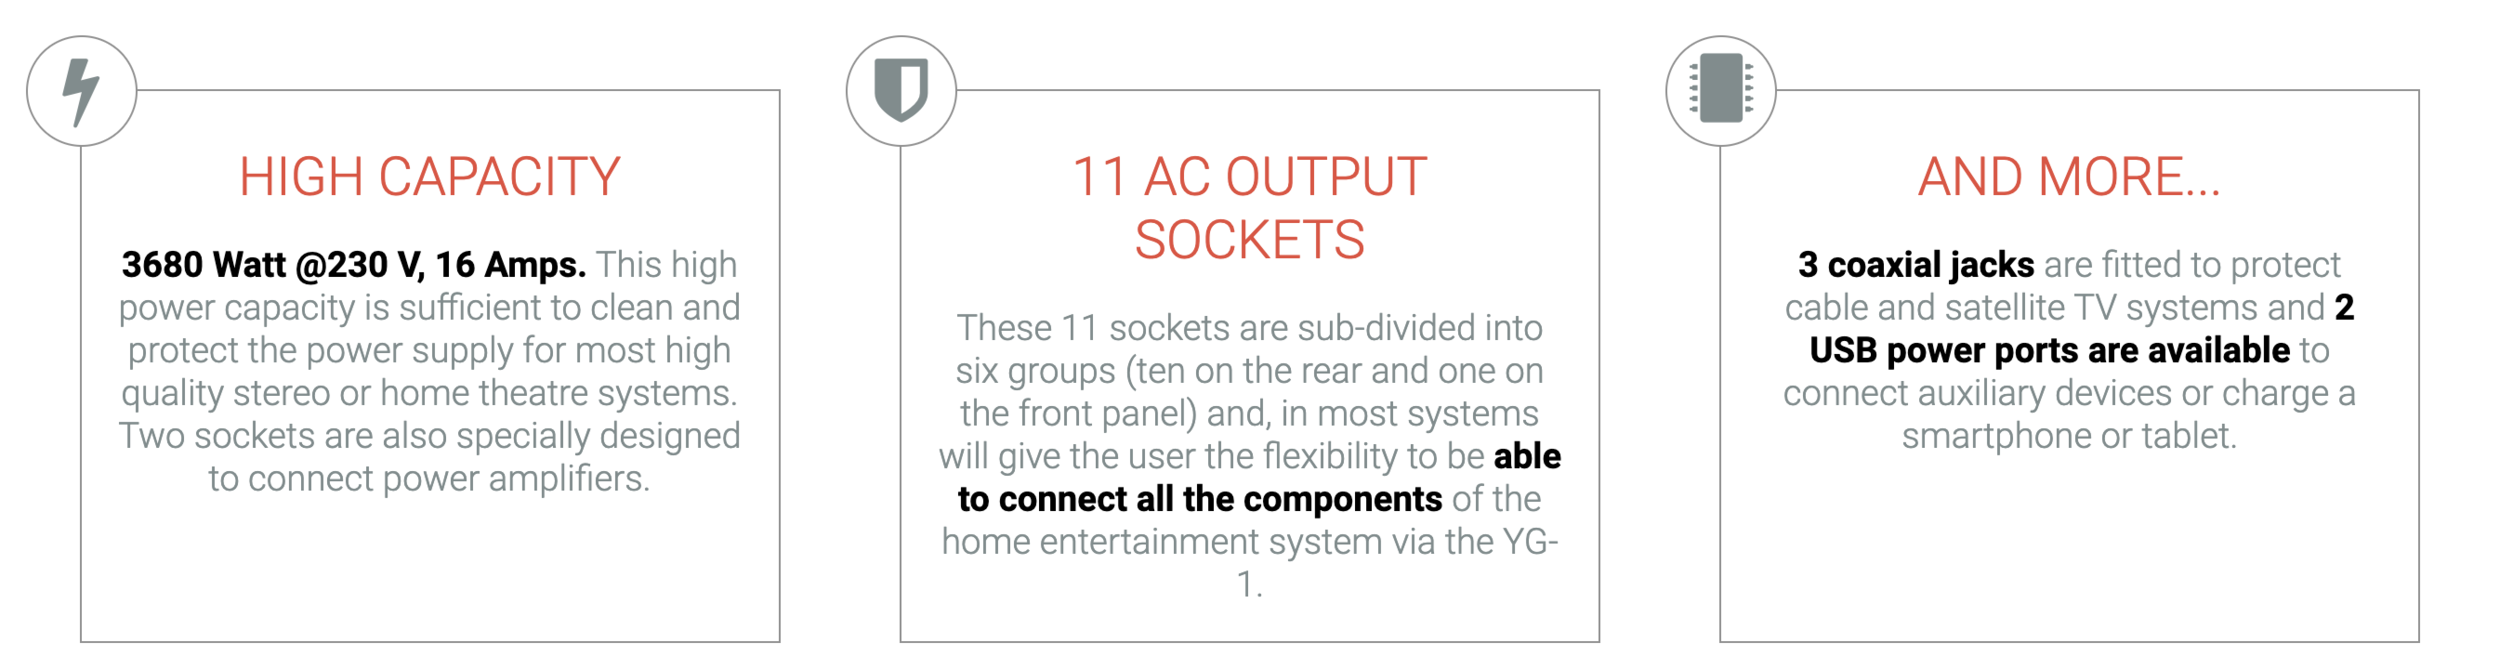 POWERGRIP-AVINNOVATORS-YG-1-high-capacity-ac-output-sockets.png